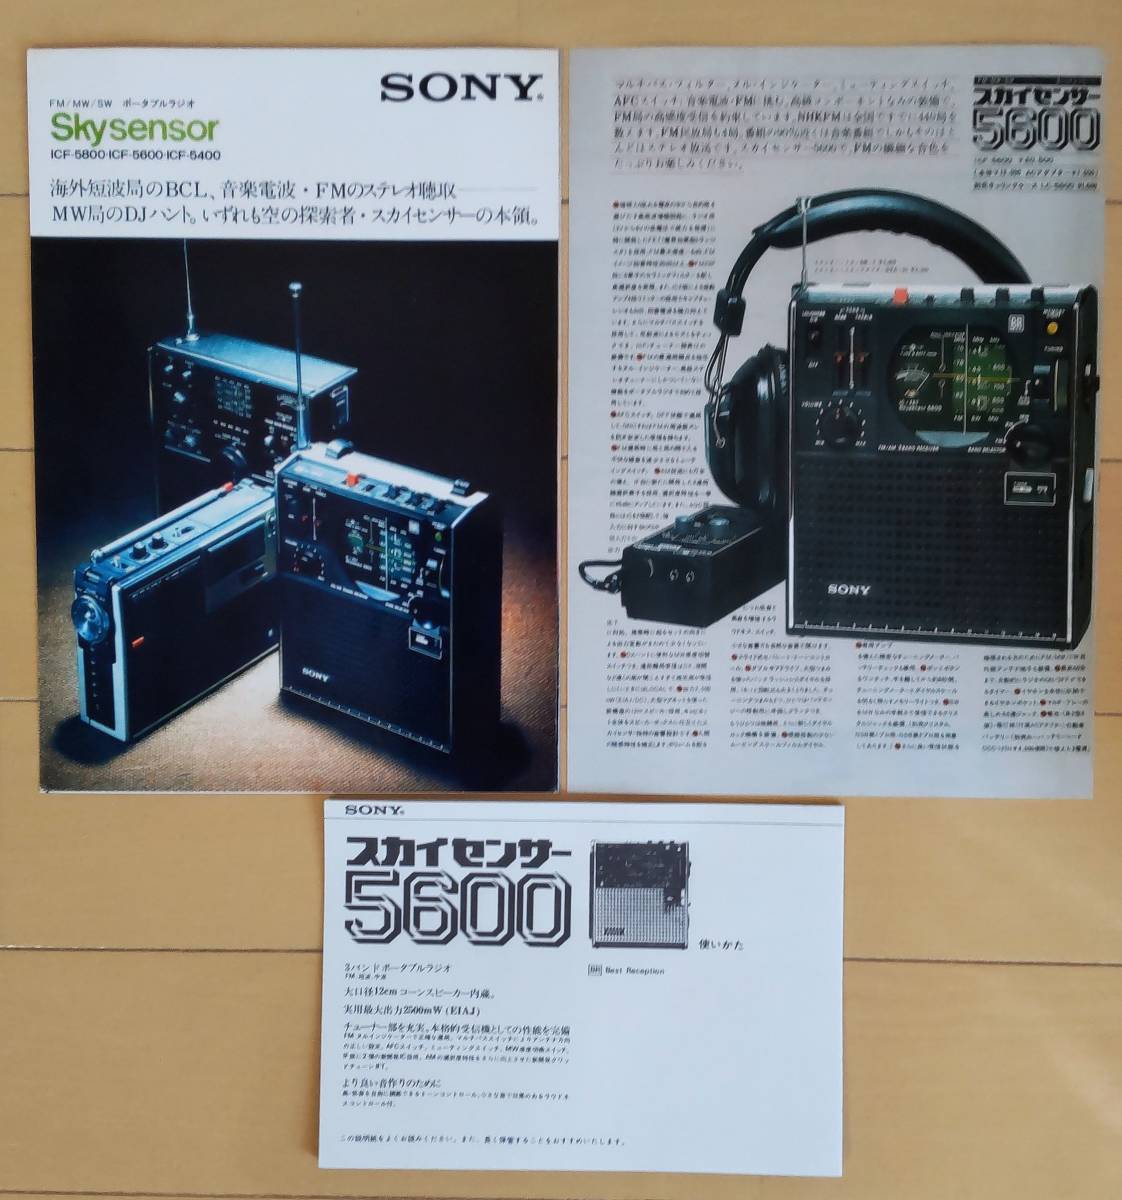 BCL名機】SONY ICF-5600 スカイセンサー 高照度青色LED化 新品